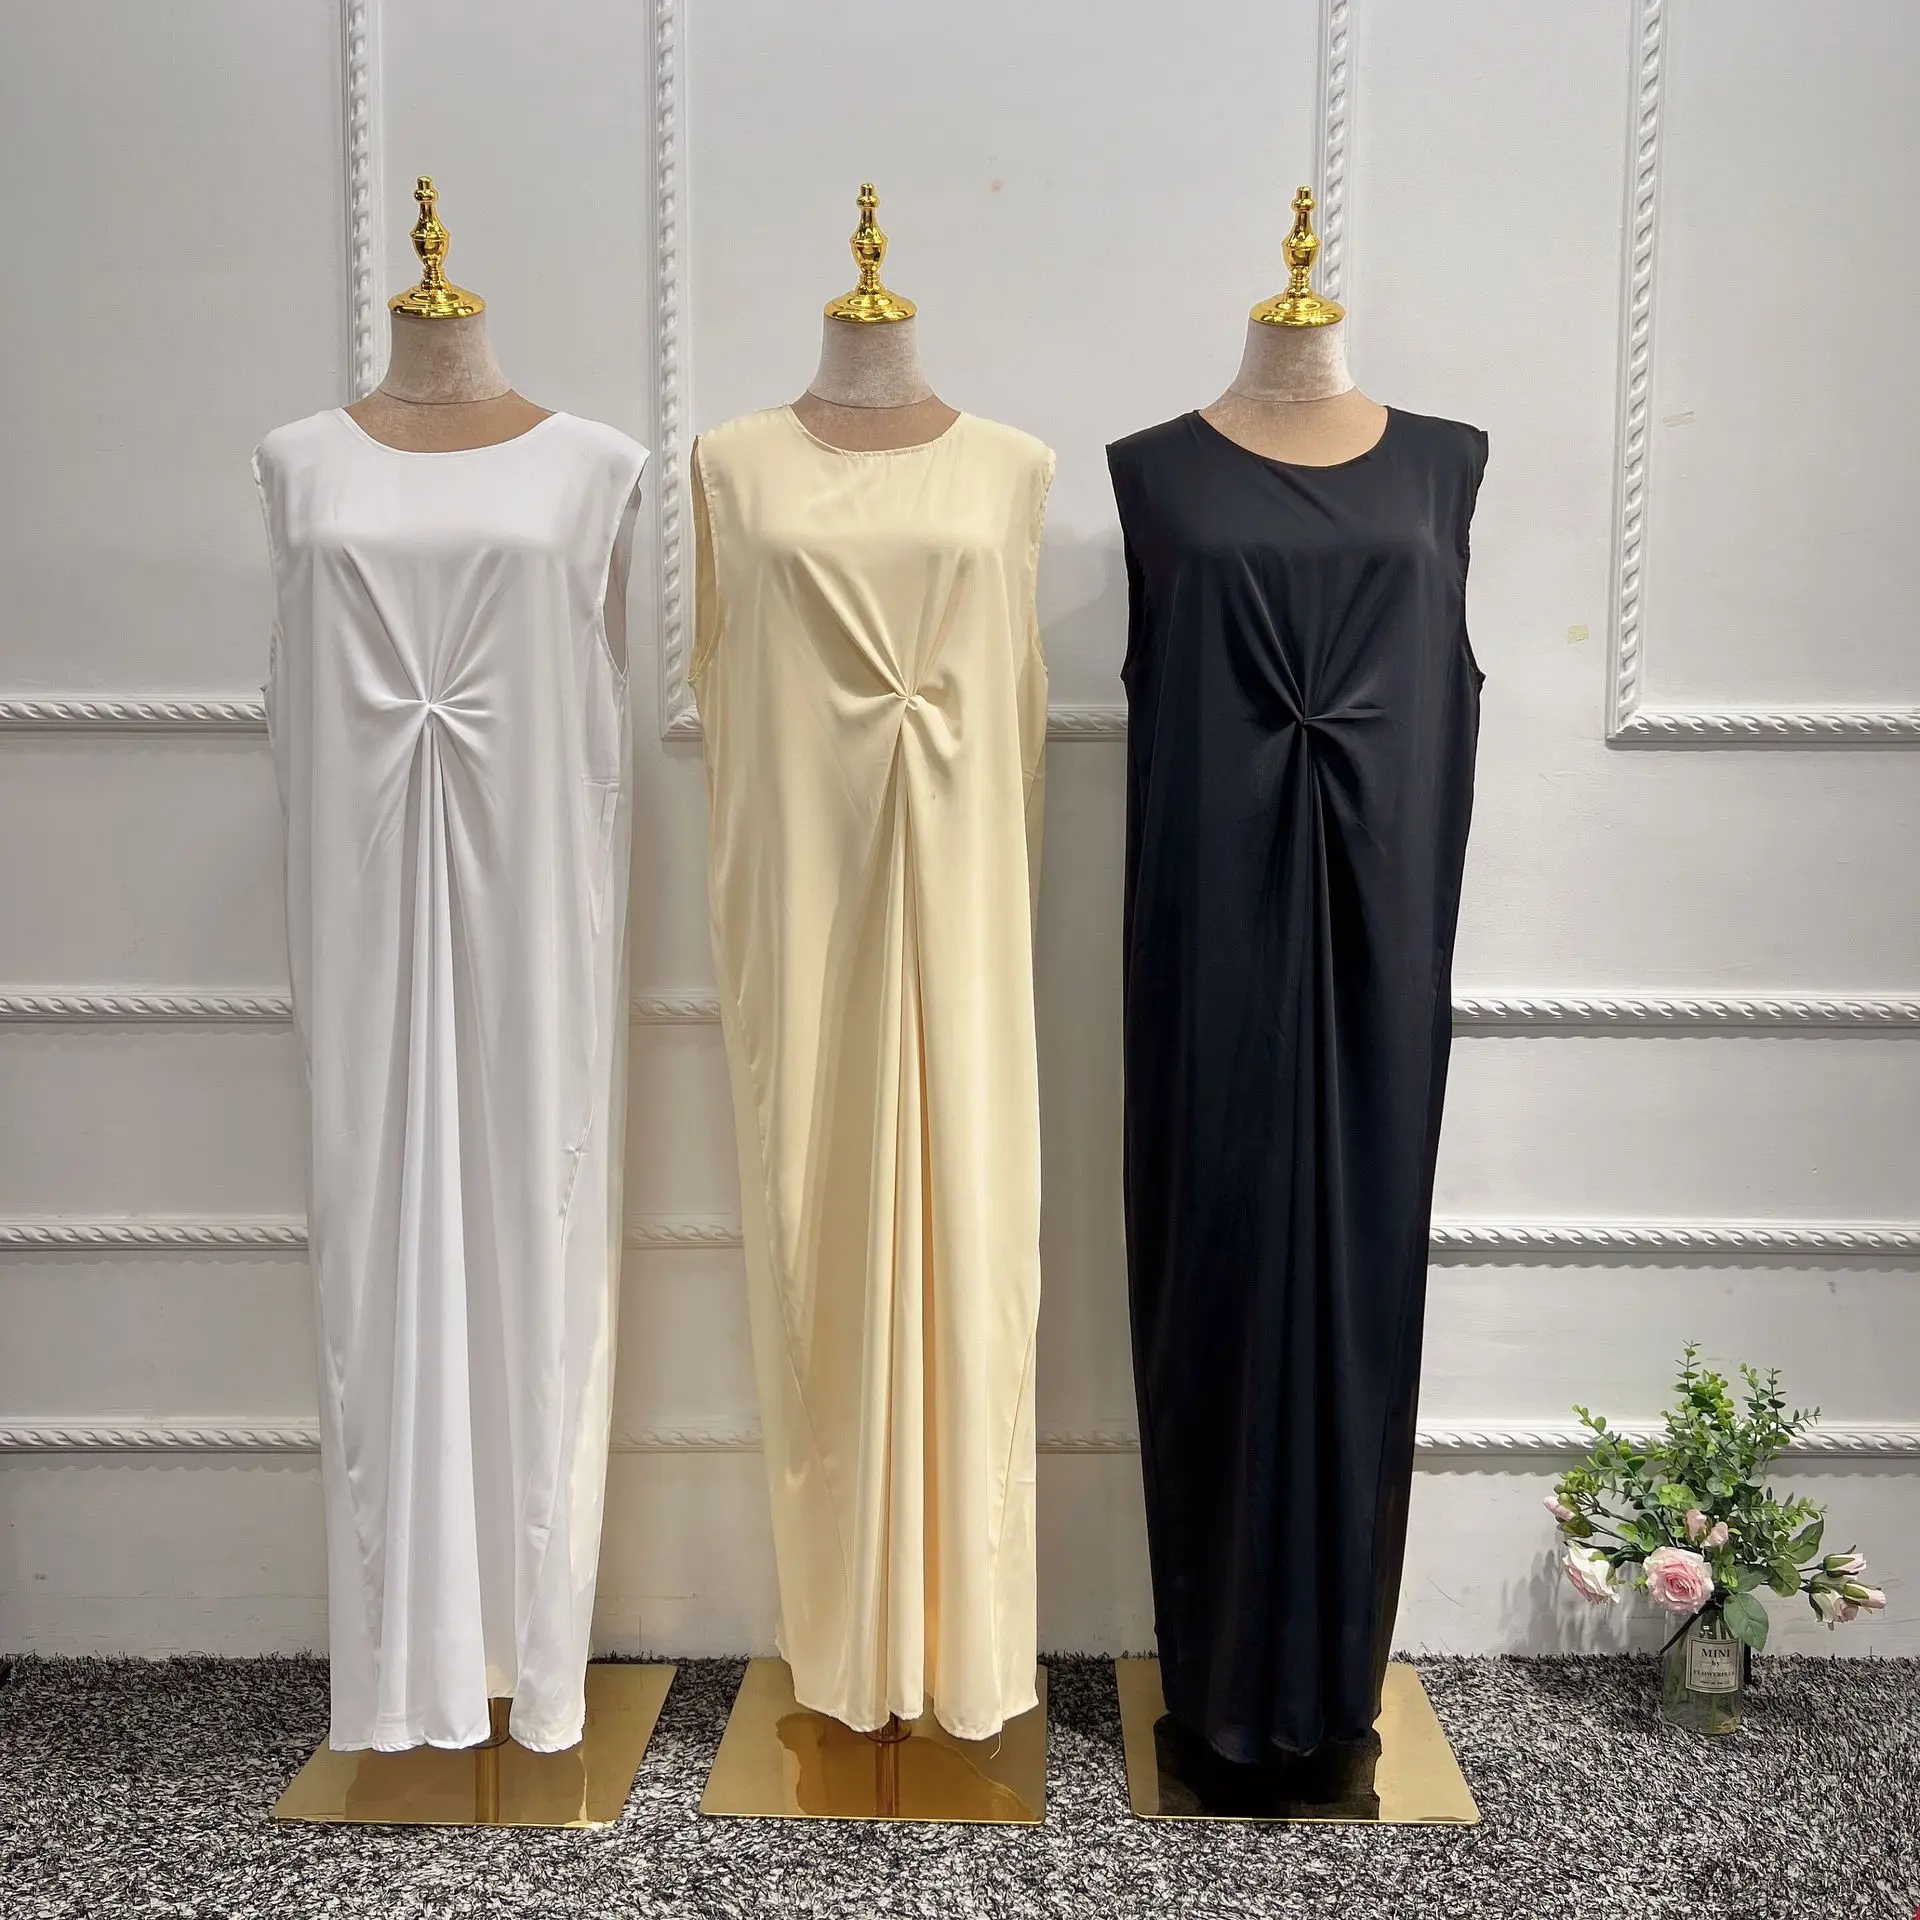 Eid Plain Inner Abaya Turkish Long Slip Dresses for Women Muslim Hijab Dress Under Kimono Abayas Dubai Summer Islamic Clothing